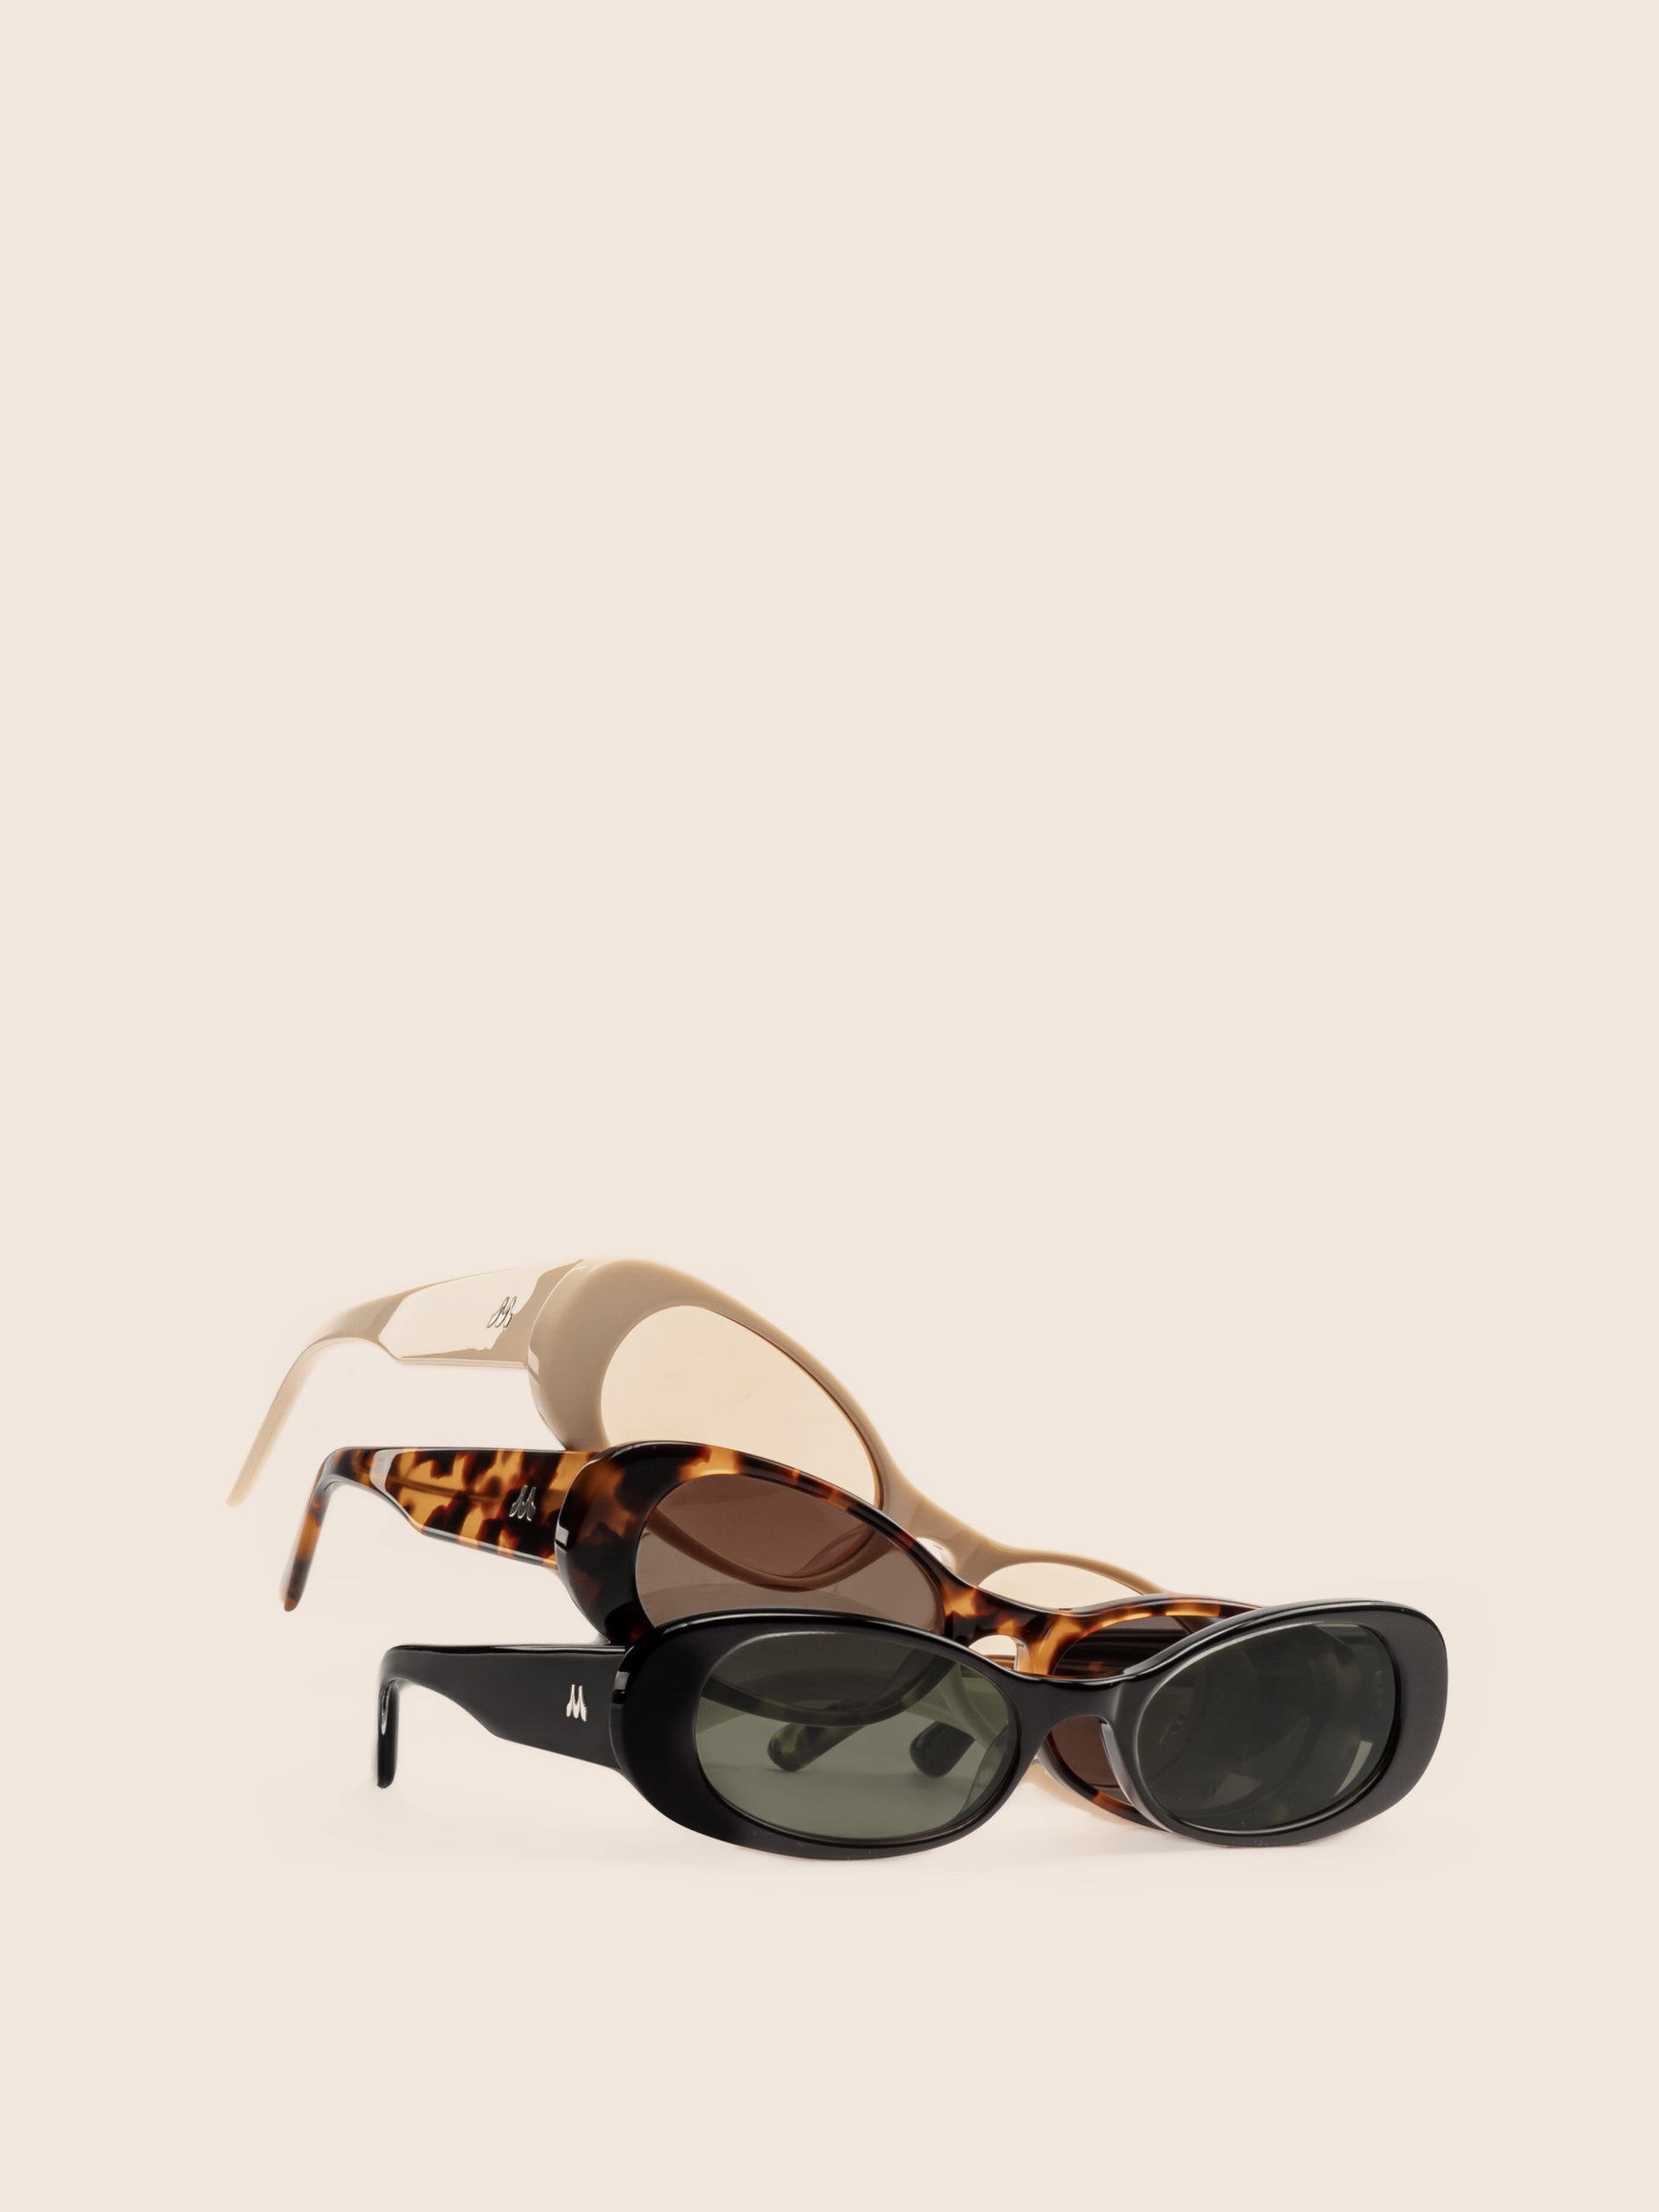 Brooklyn Black Sunglasses